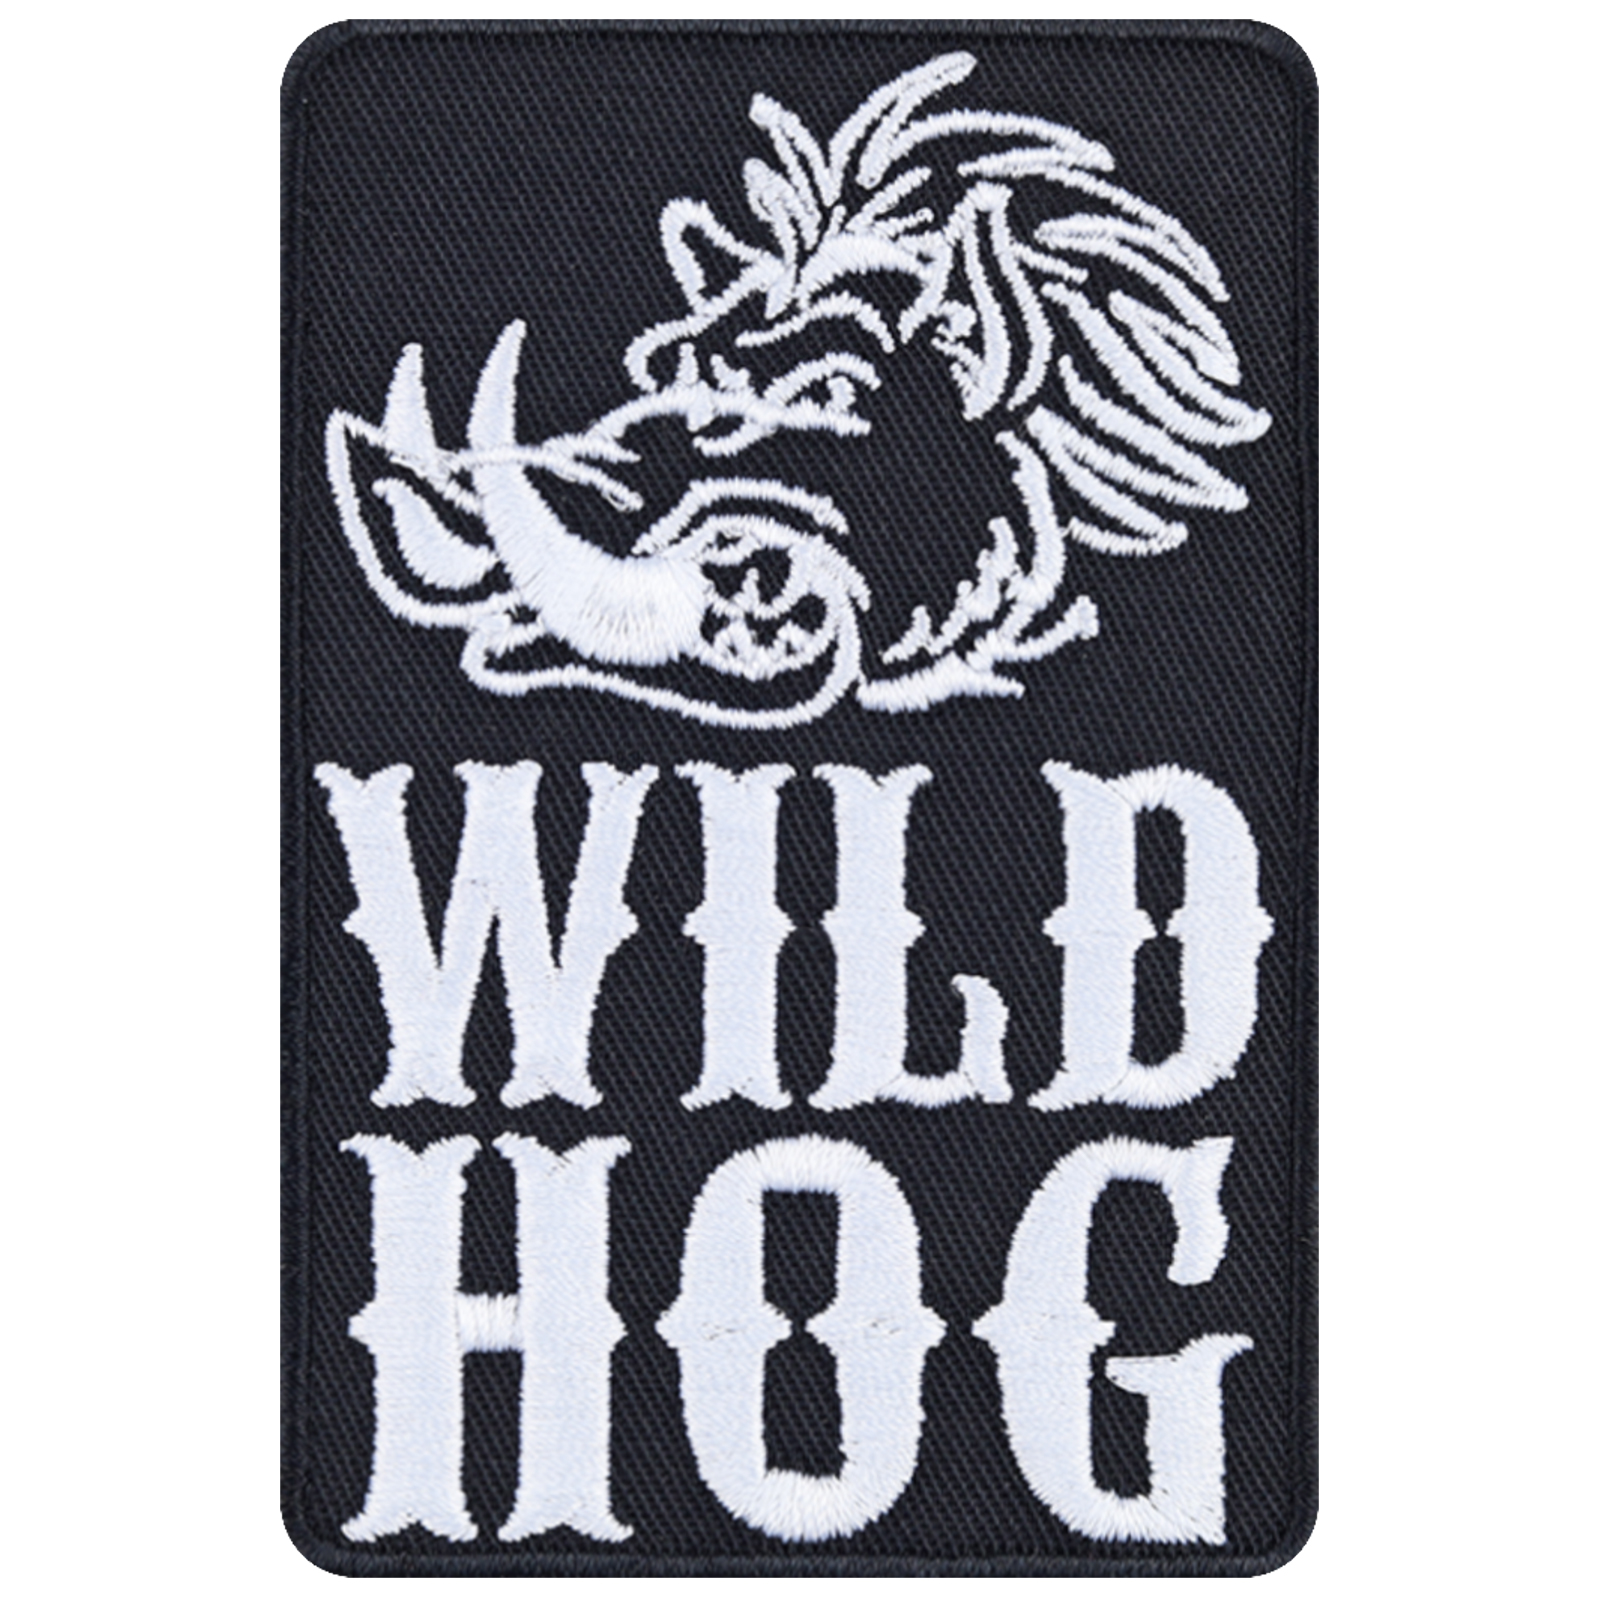 Wild hog - Patch